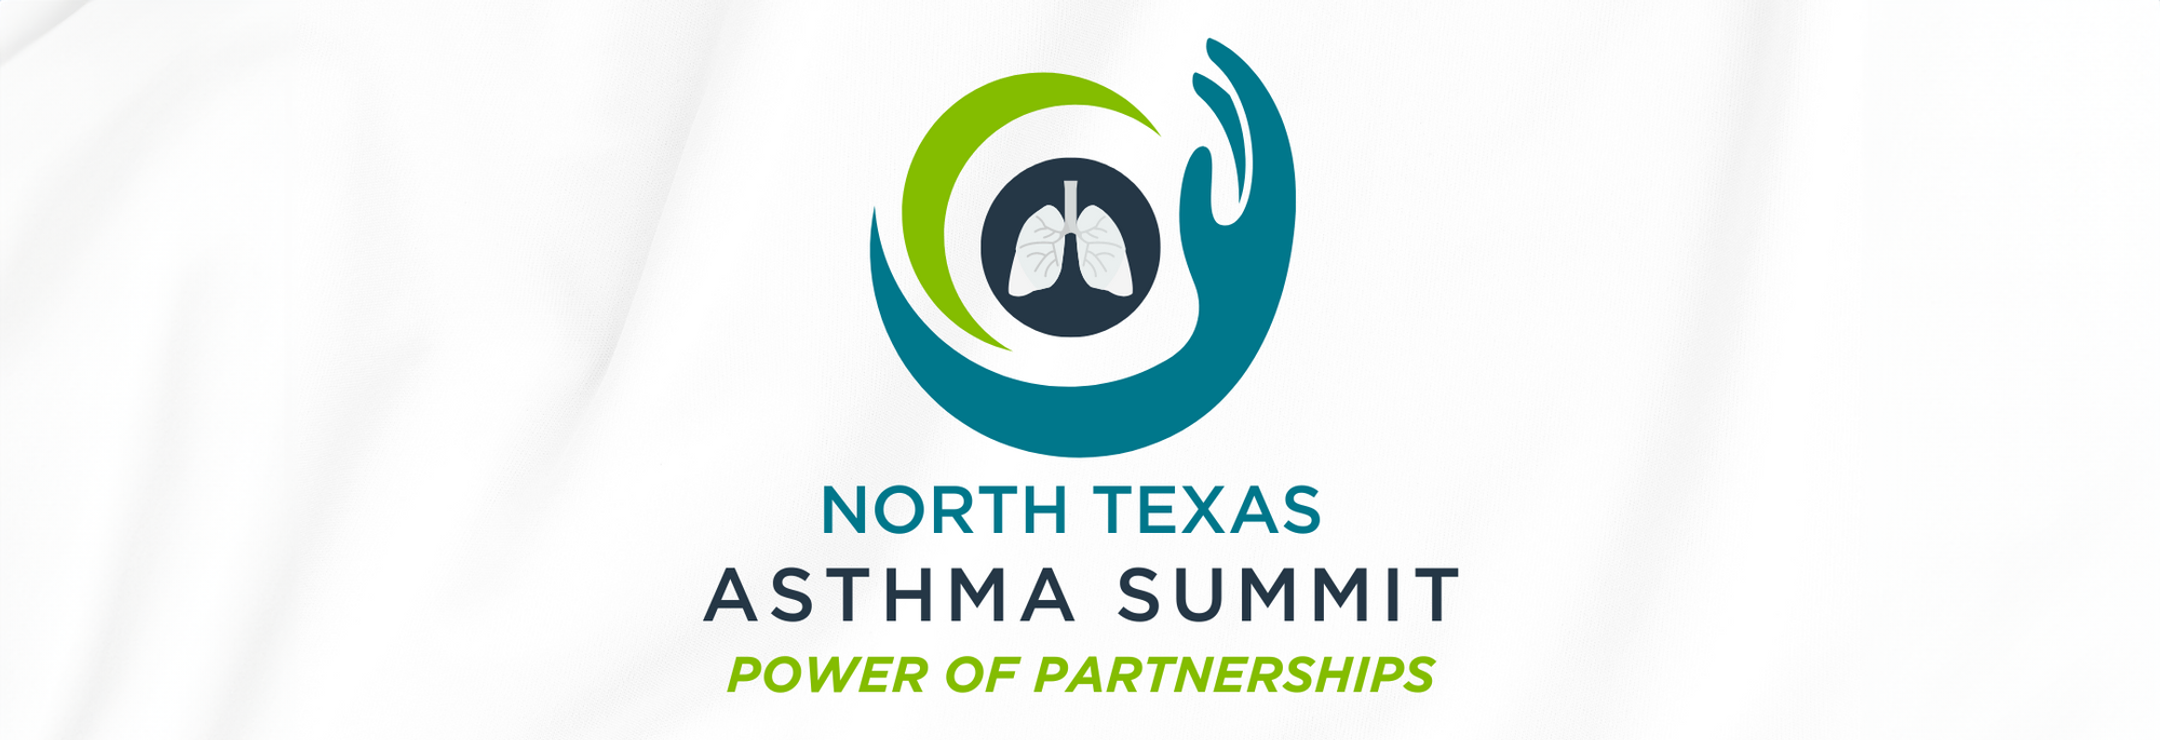 North Texas Asthma Summit Banner